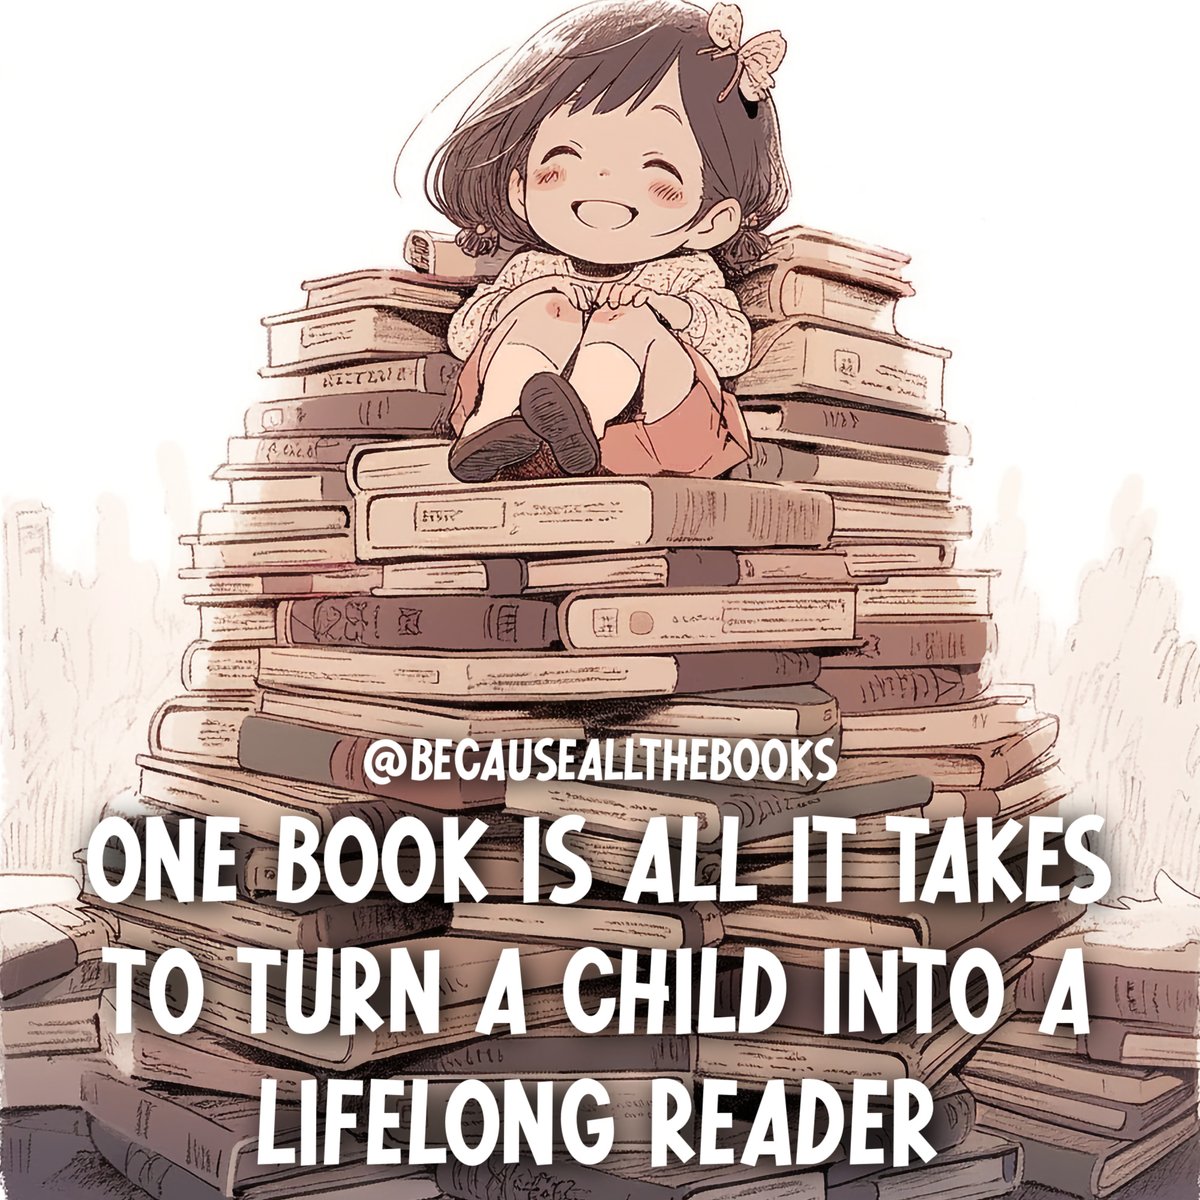 Give them books! 

#BecauseAllTheBooks #KidsWhoRead #BooksMakeGreatGifts